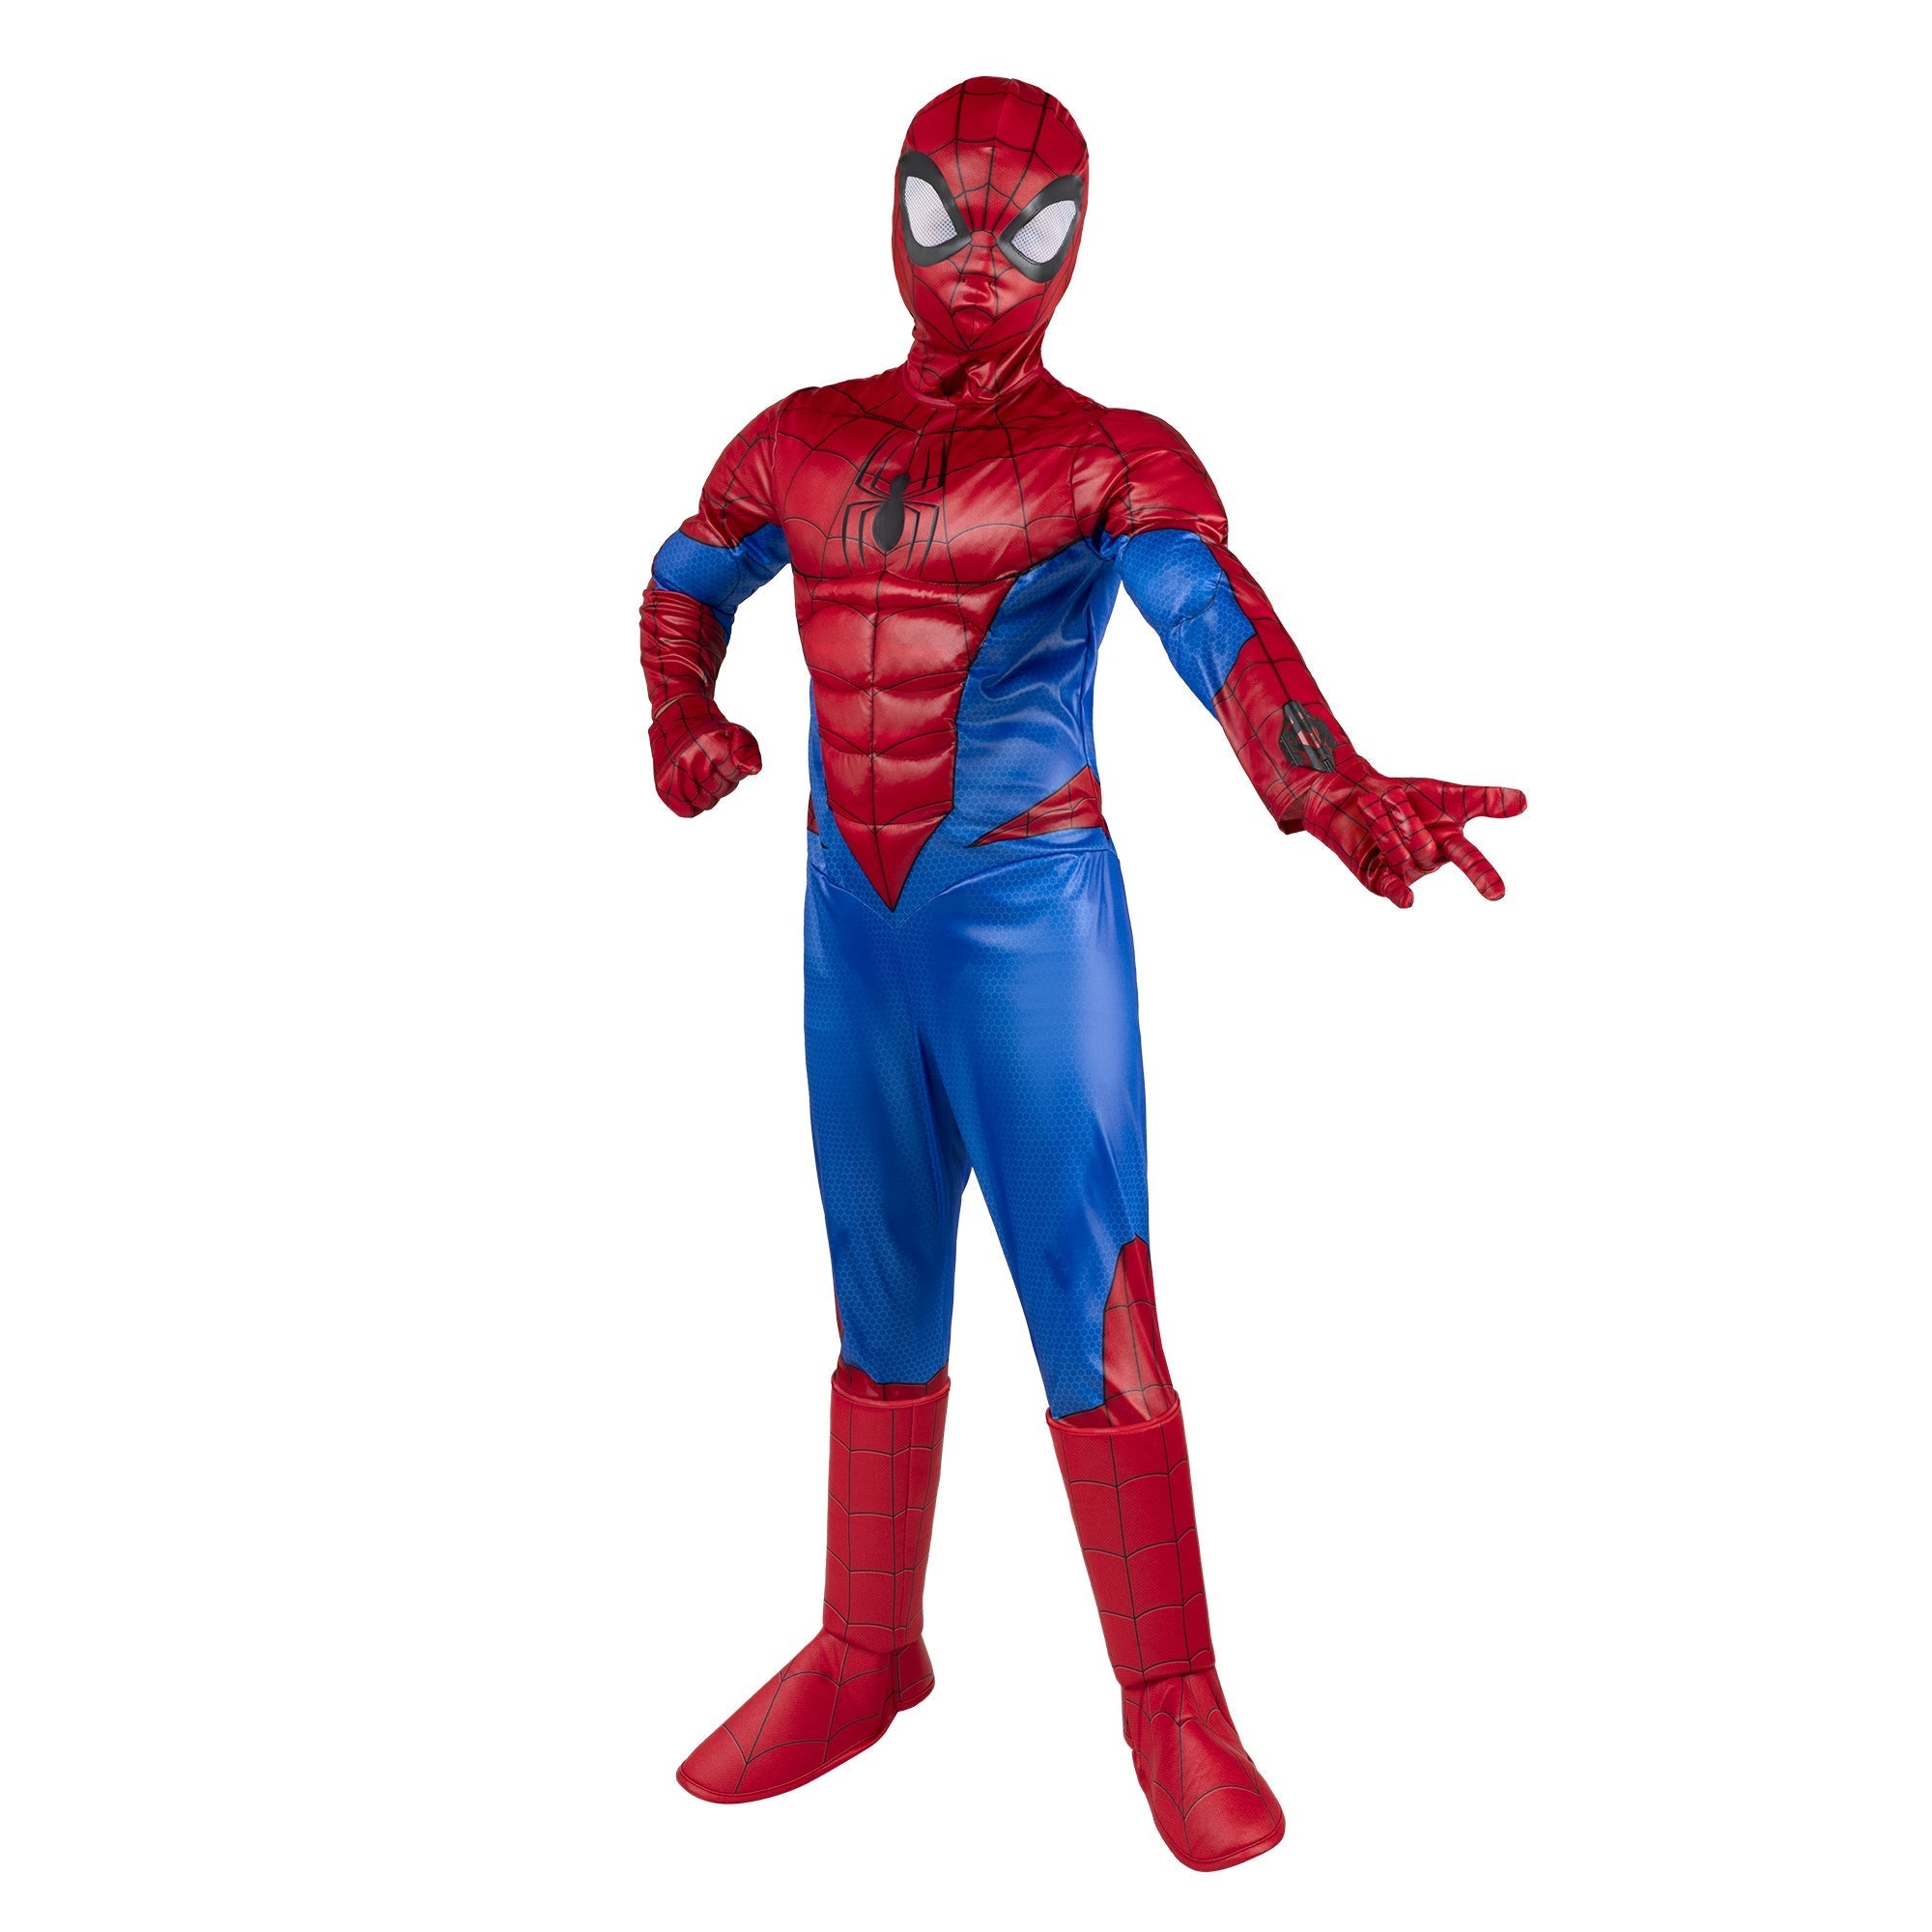 Costume Spiderman Venom pour enfants, costume Spiderman, costume